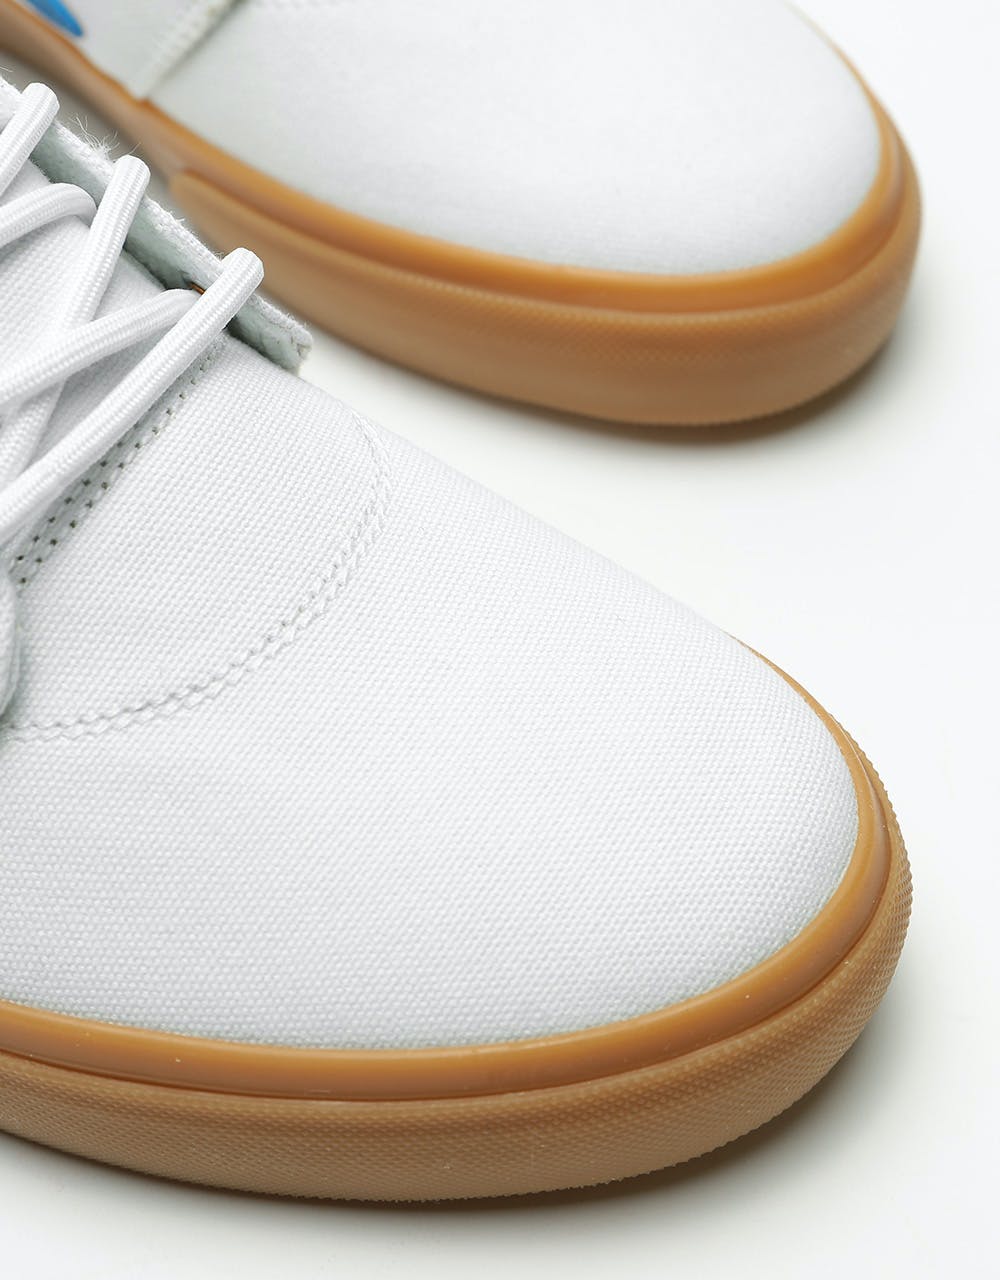 Lakai Griffin Canvas Skate Shoes - White/Canvas